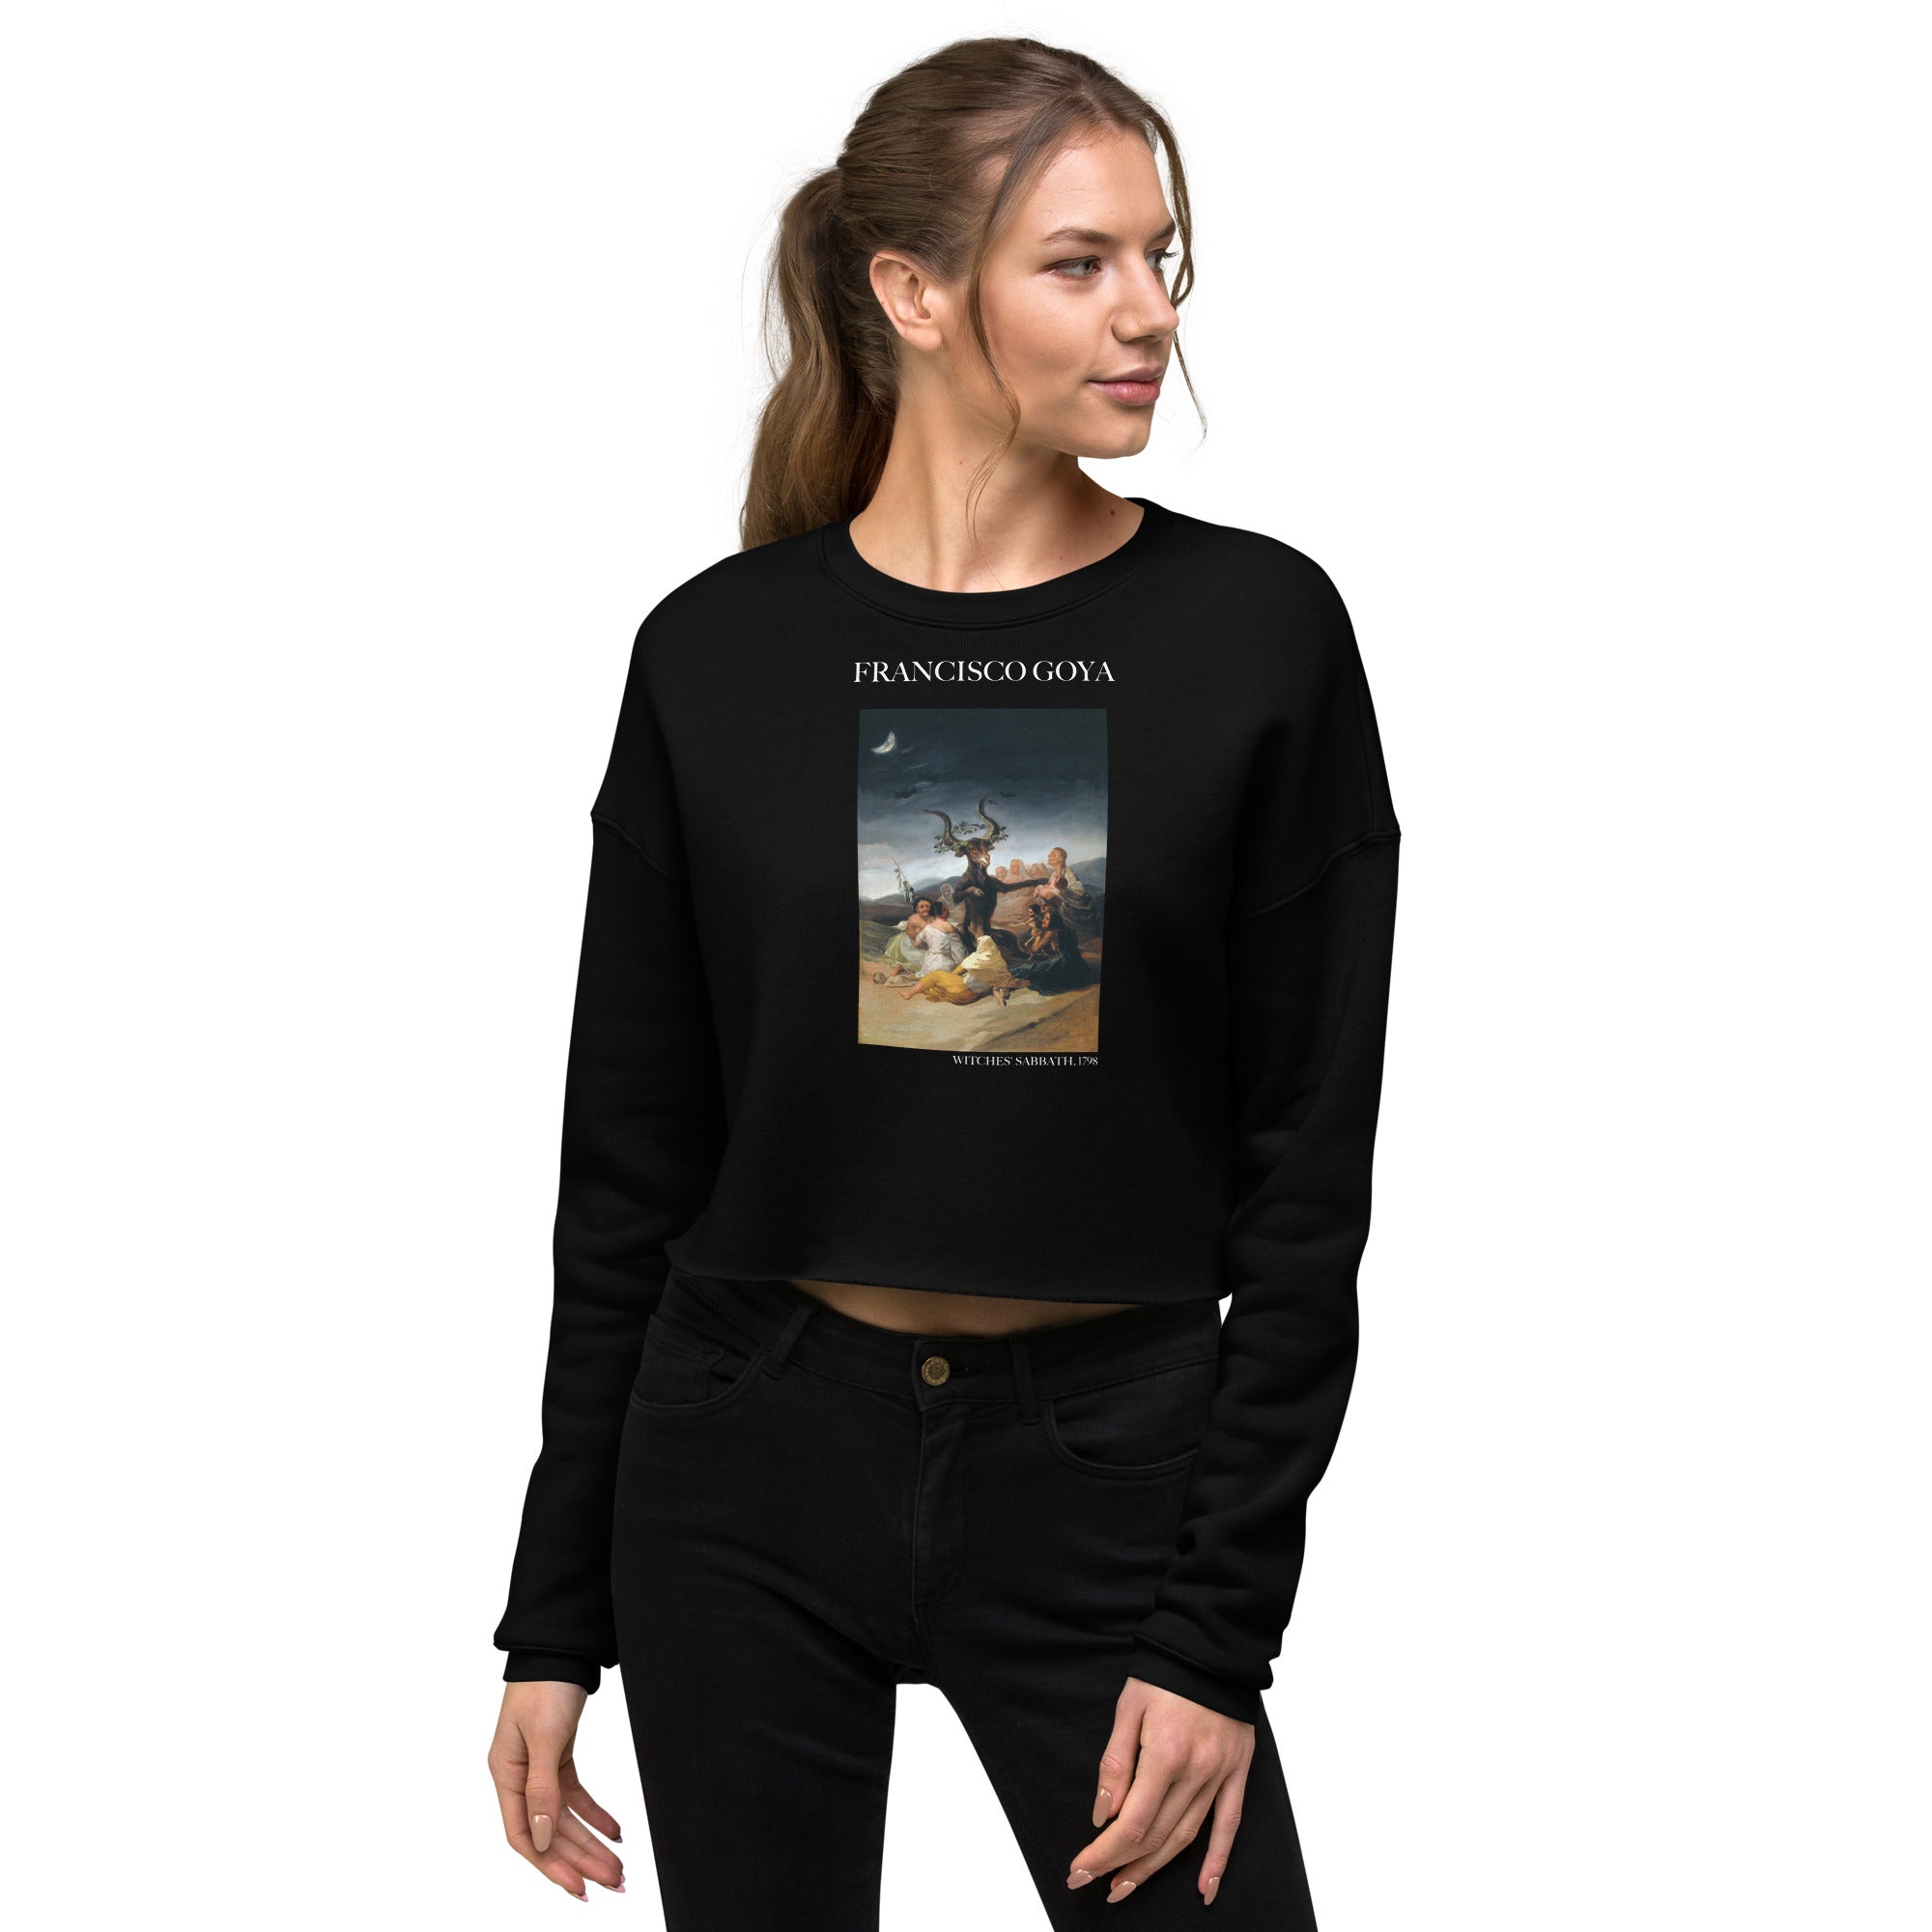 Francisco Goya 'Witches' Sabbath' Famous Painting Cropped Sweatshirt | Premium Art Cropped Sweatshirt